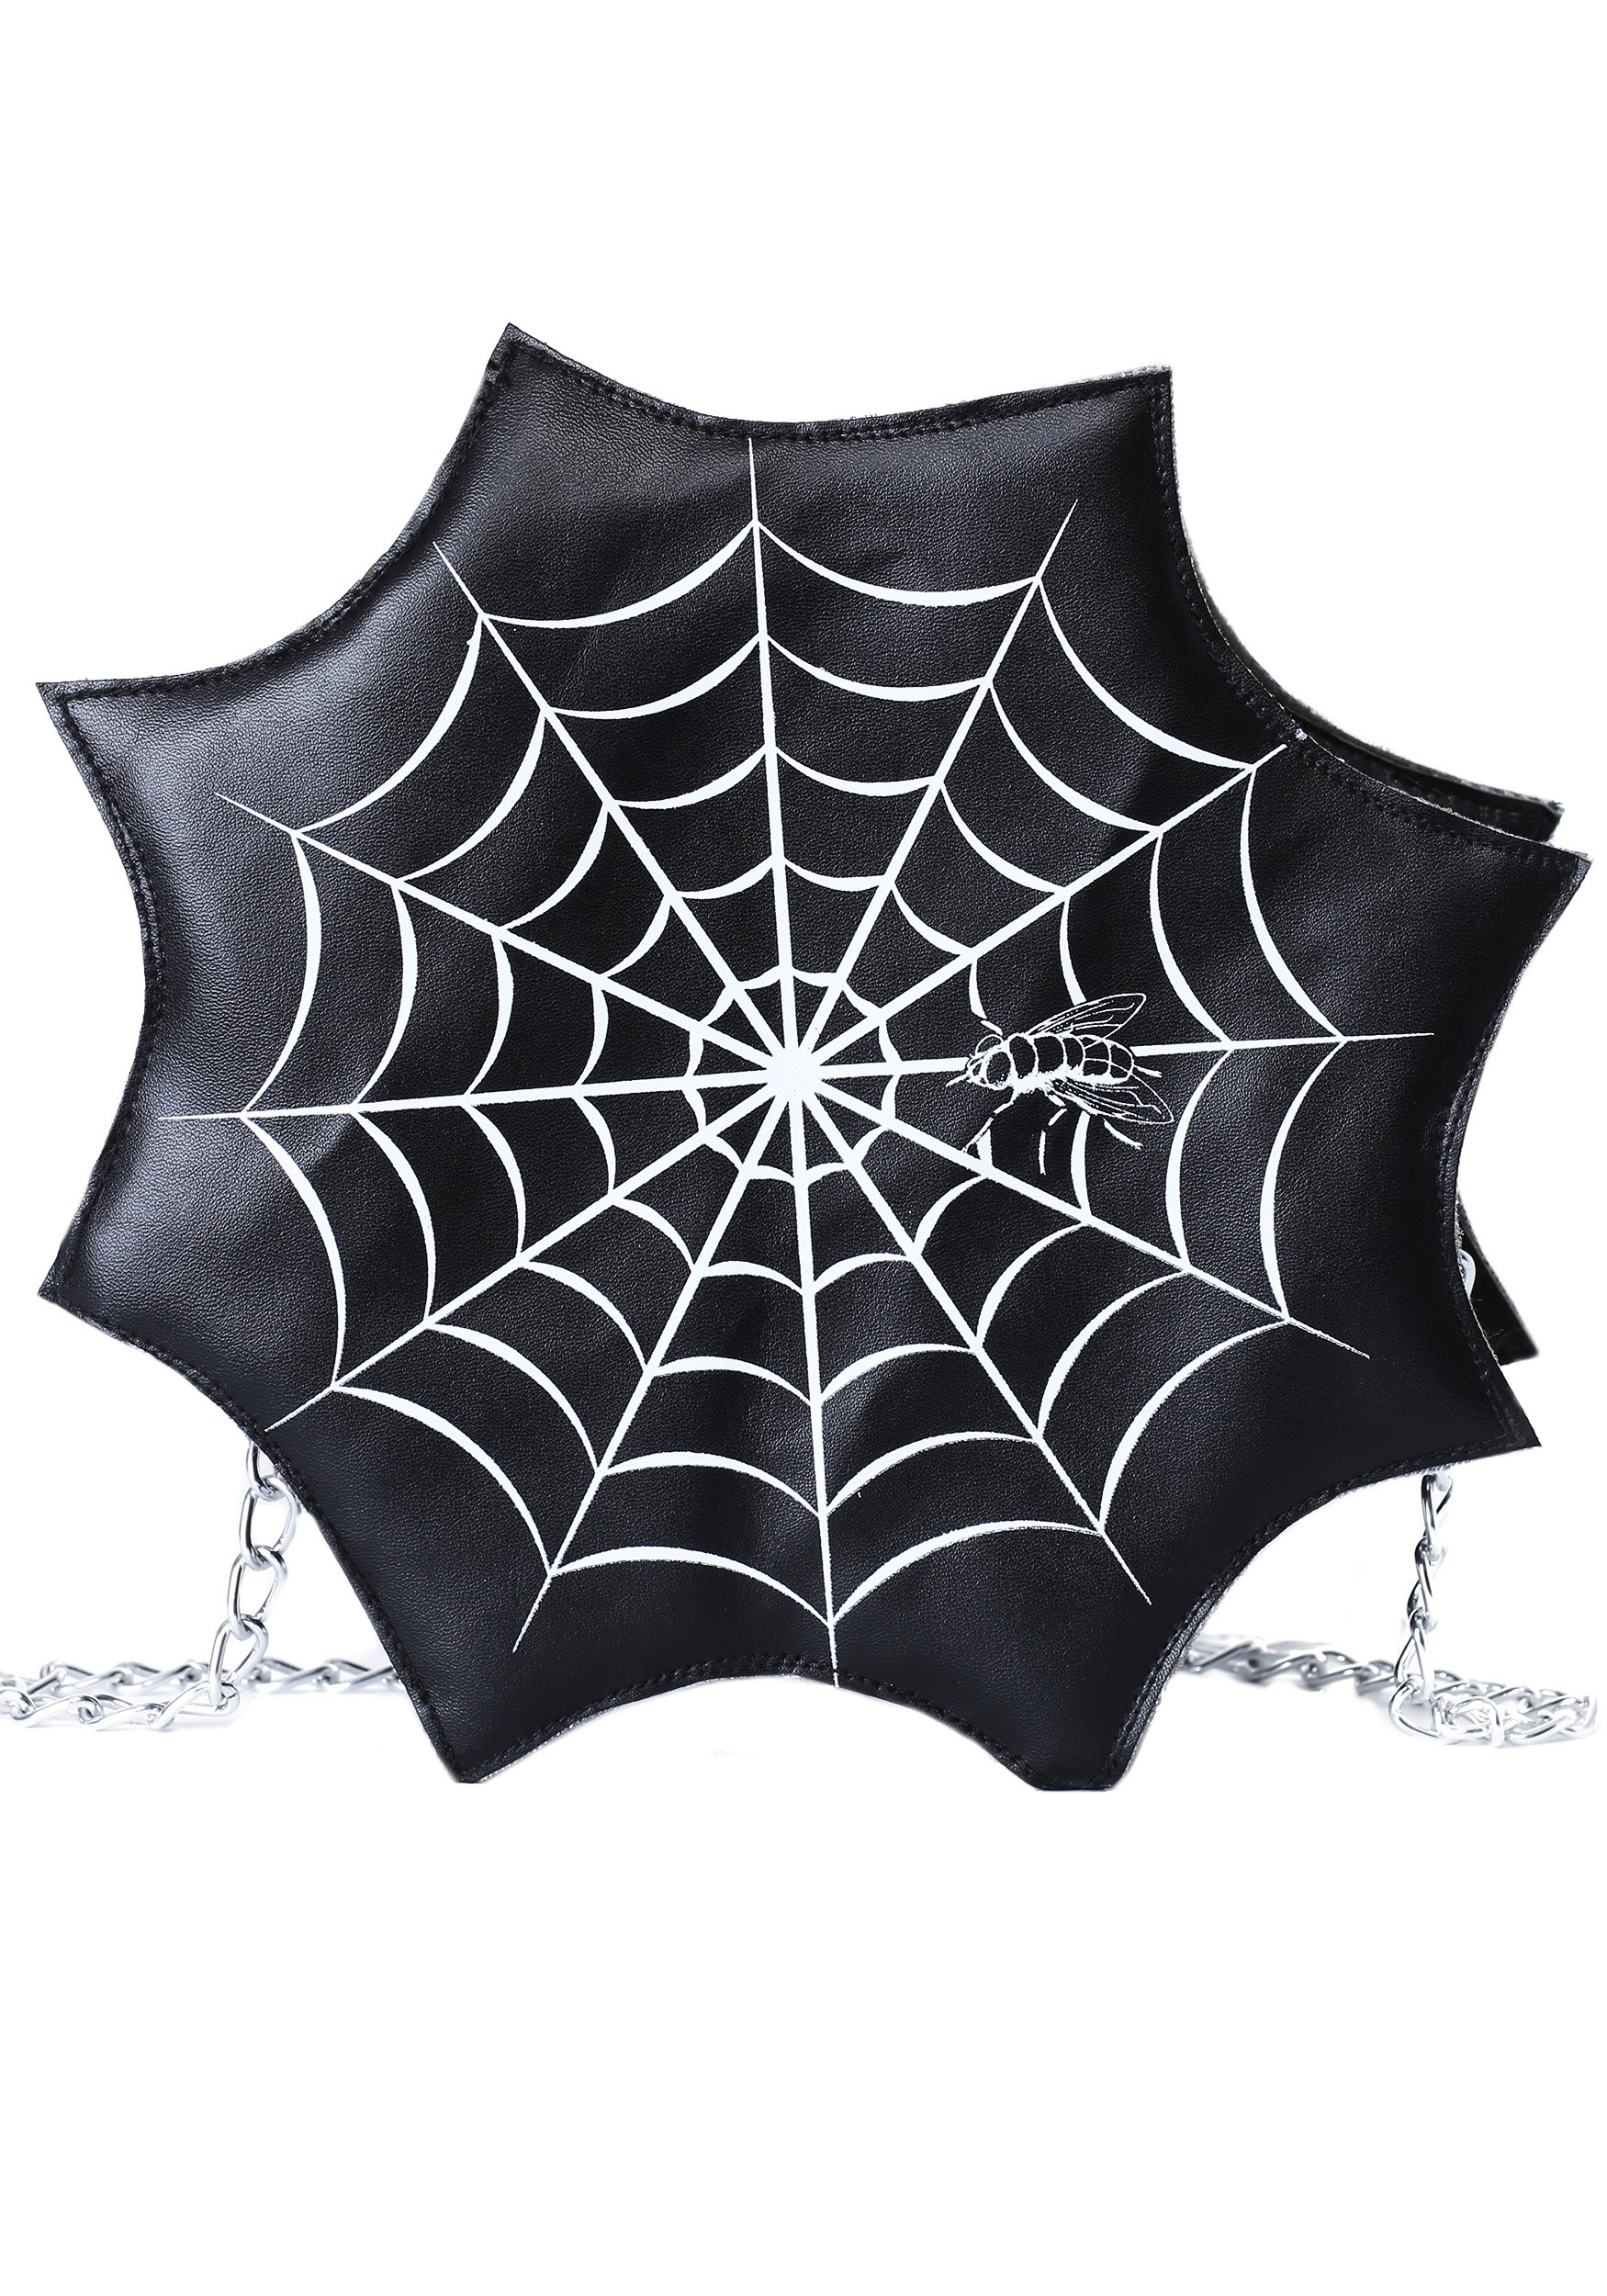 Photos - Fancy Dress FUN Costumes Spider Web Purse for Women Black/White